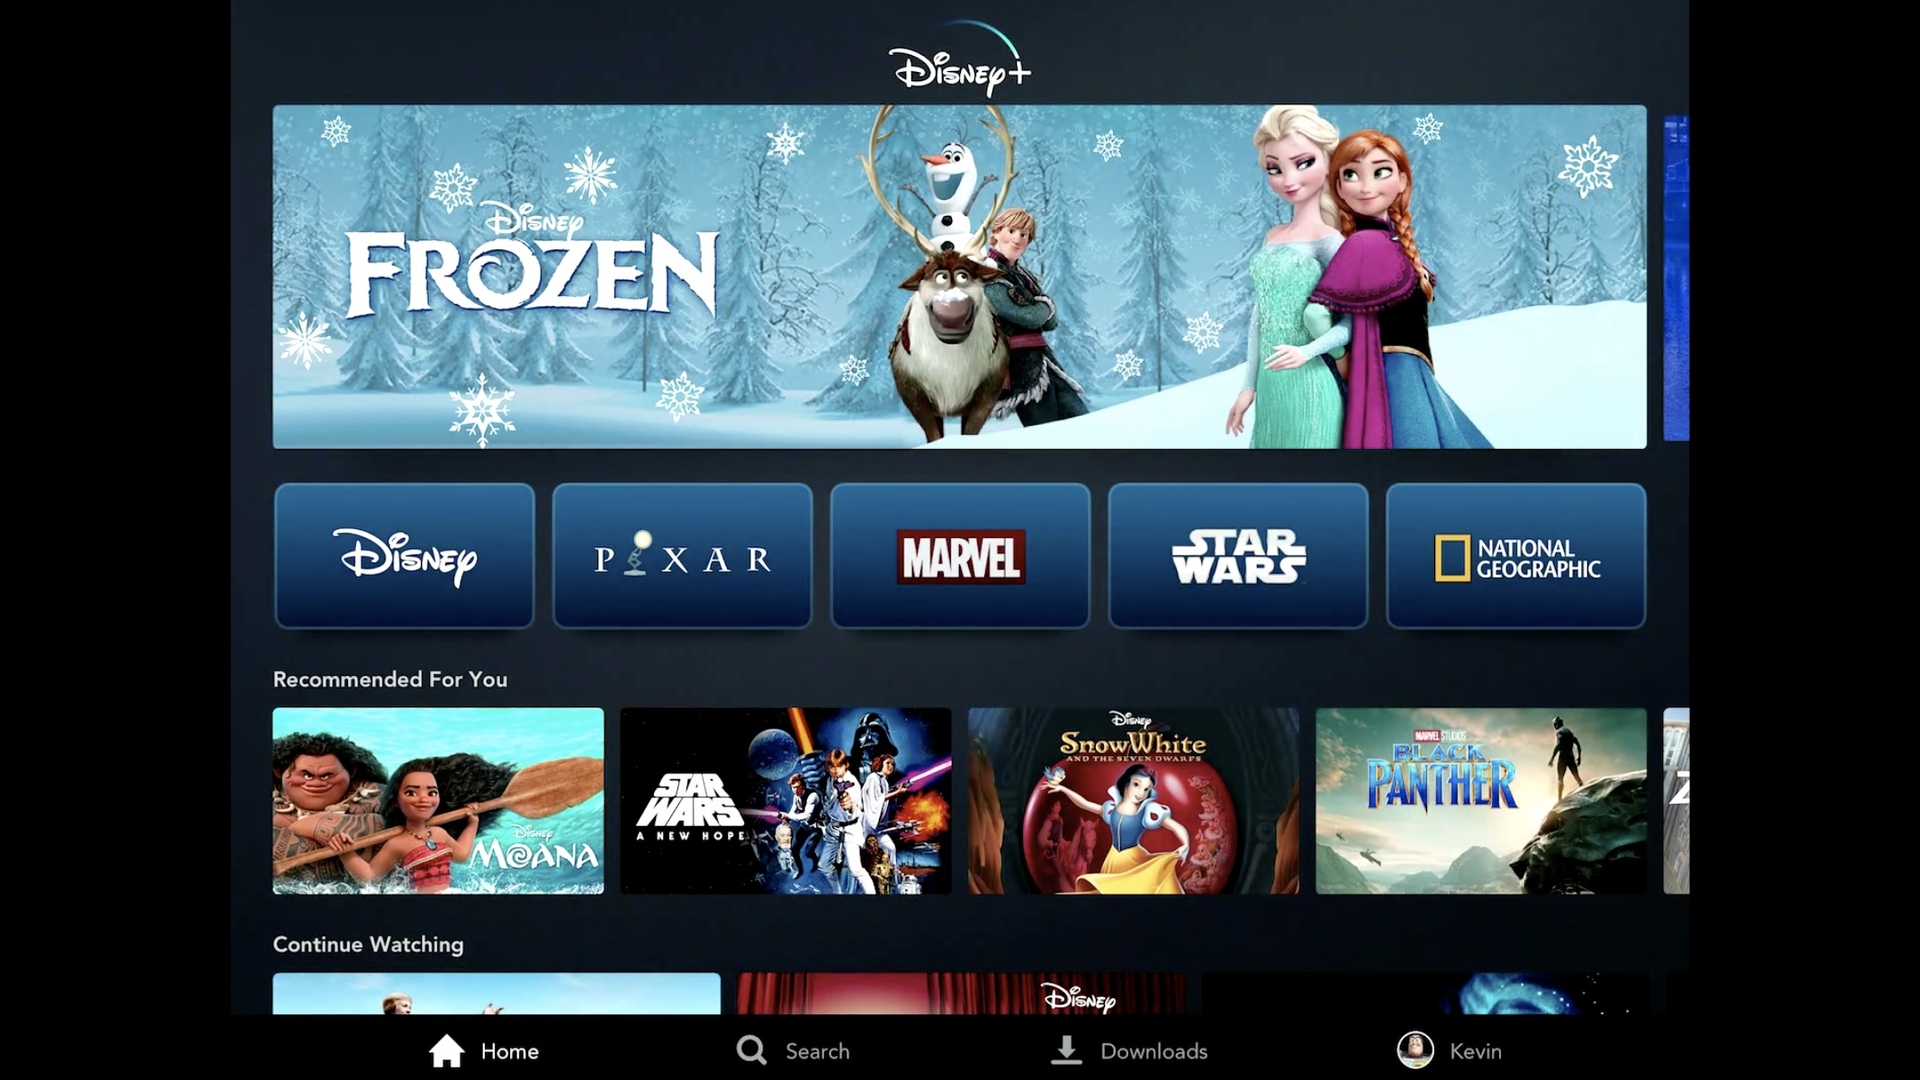 Disney+ interface